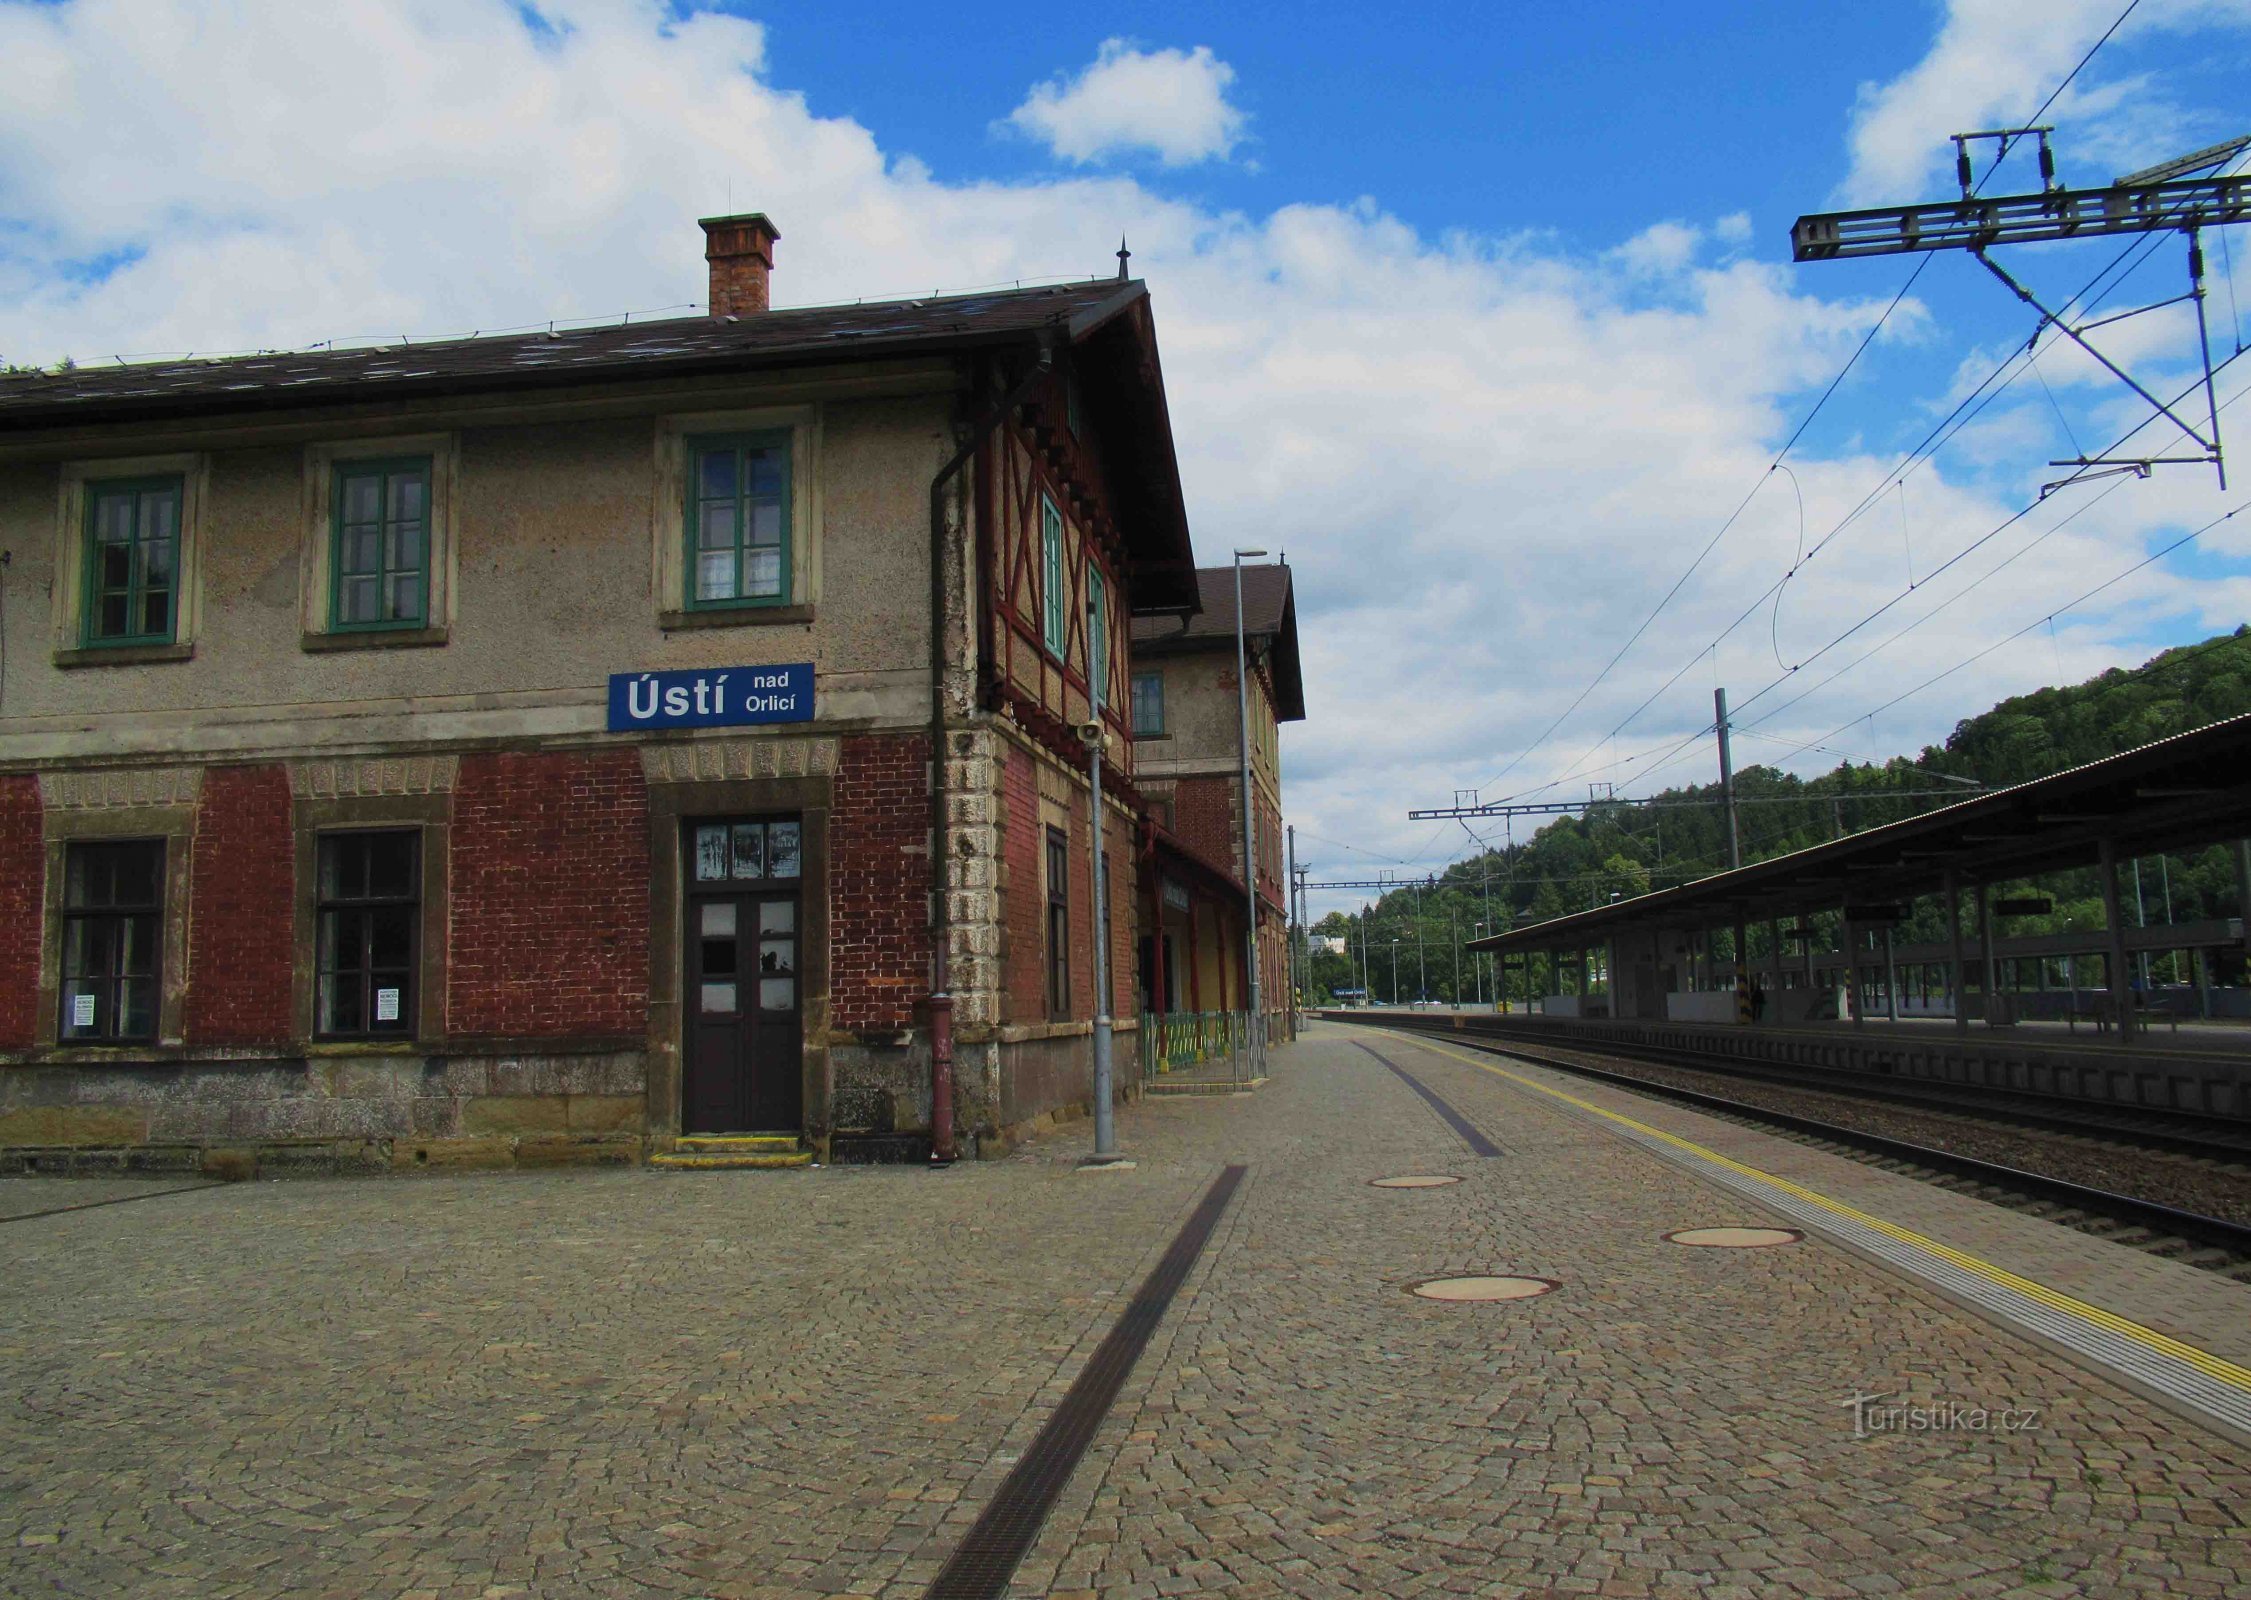 Historisch gebouw van het treinstation in Ústí nad Orlicí